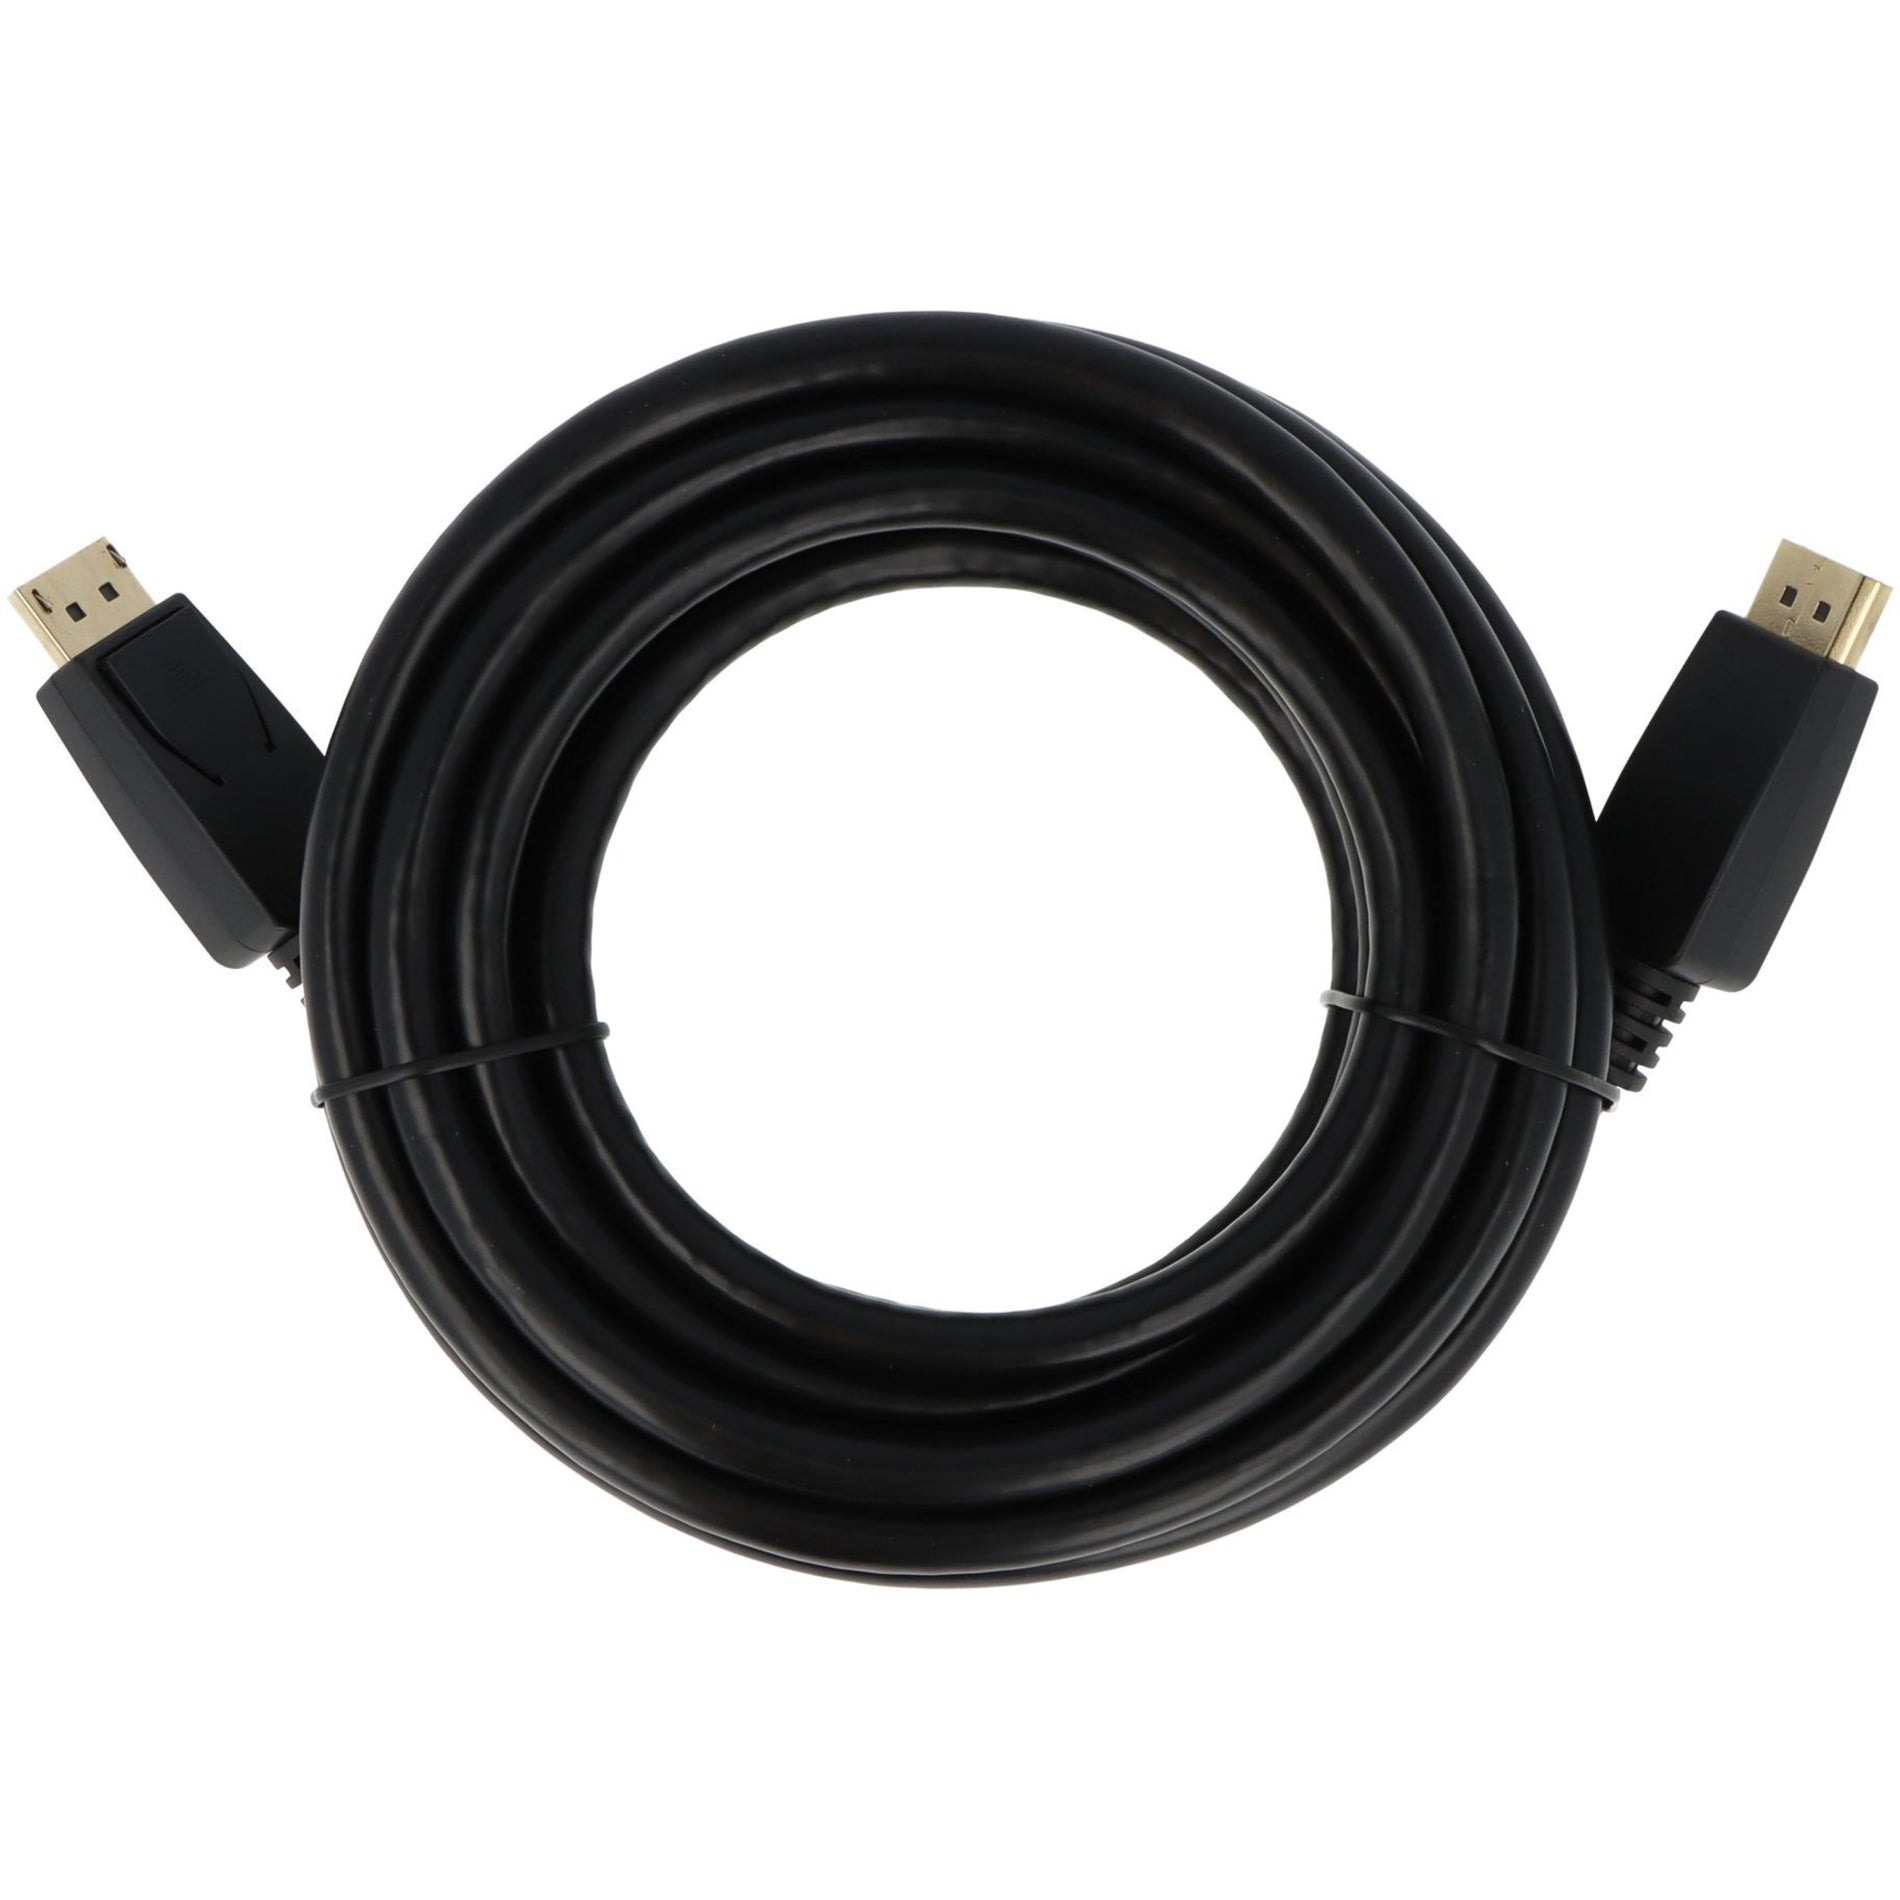 VisionTek 901429 DisplayPort to DisplayPort 1.4 Cable 4.5 Meter, 7680 x 4320 Resolution, Plug & Play